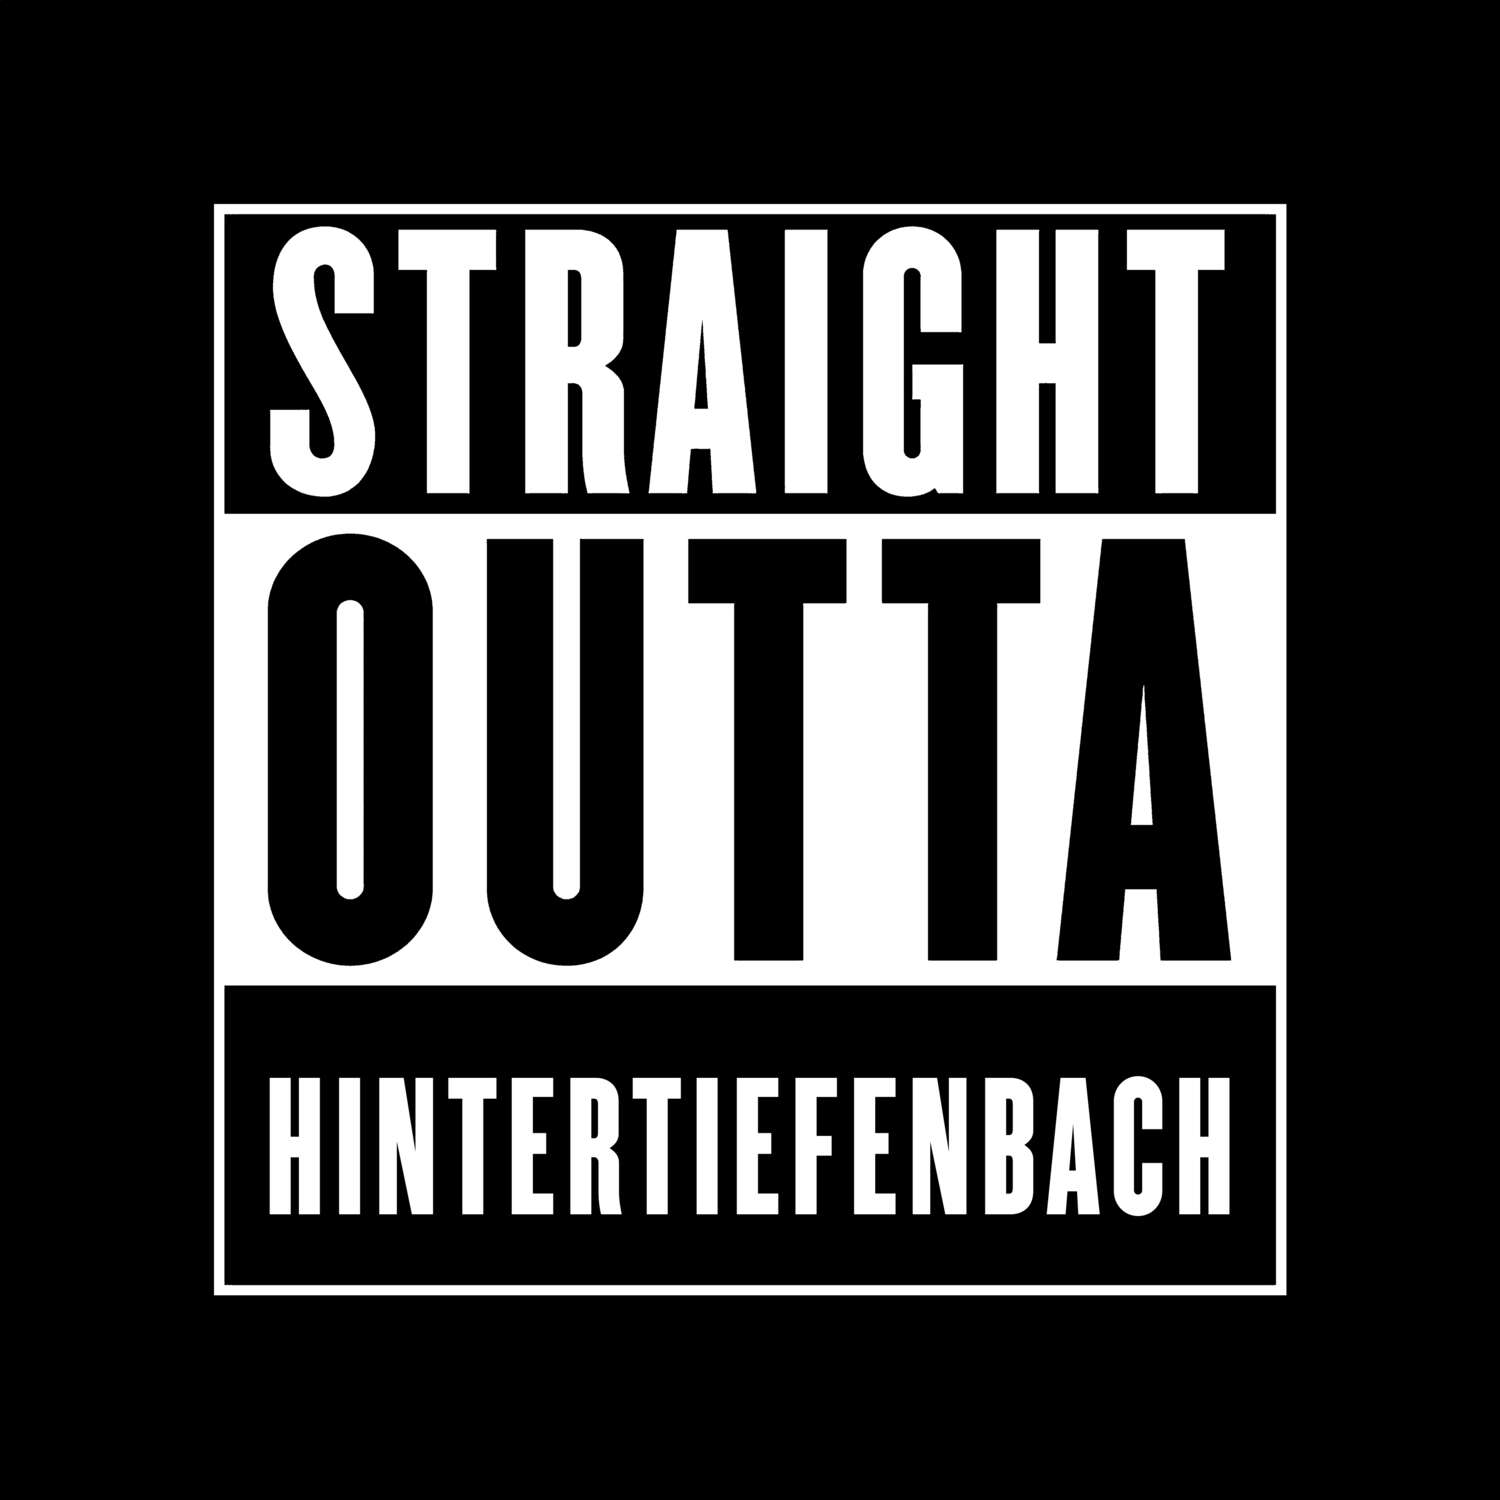 Hintertiefenbach T-Shirt »Straight Outta«